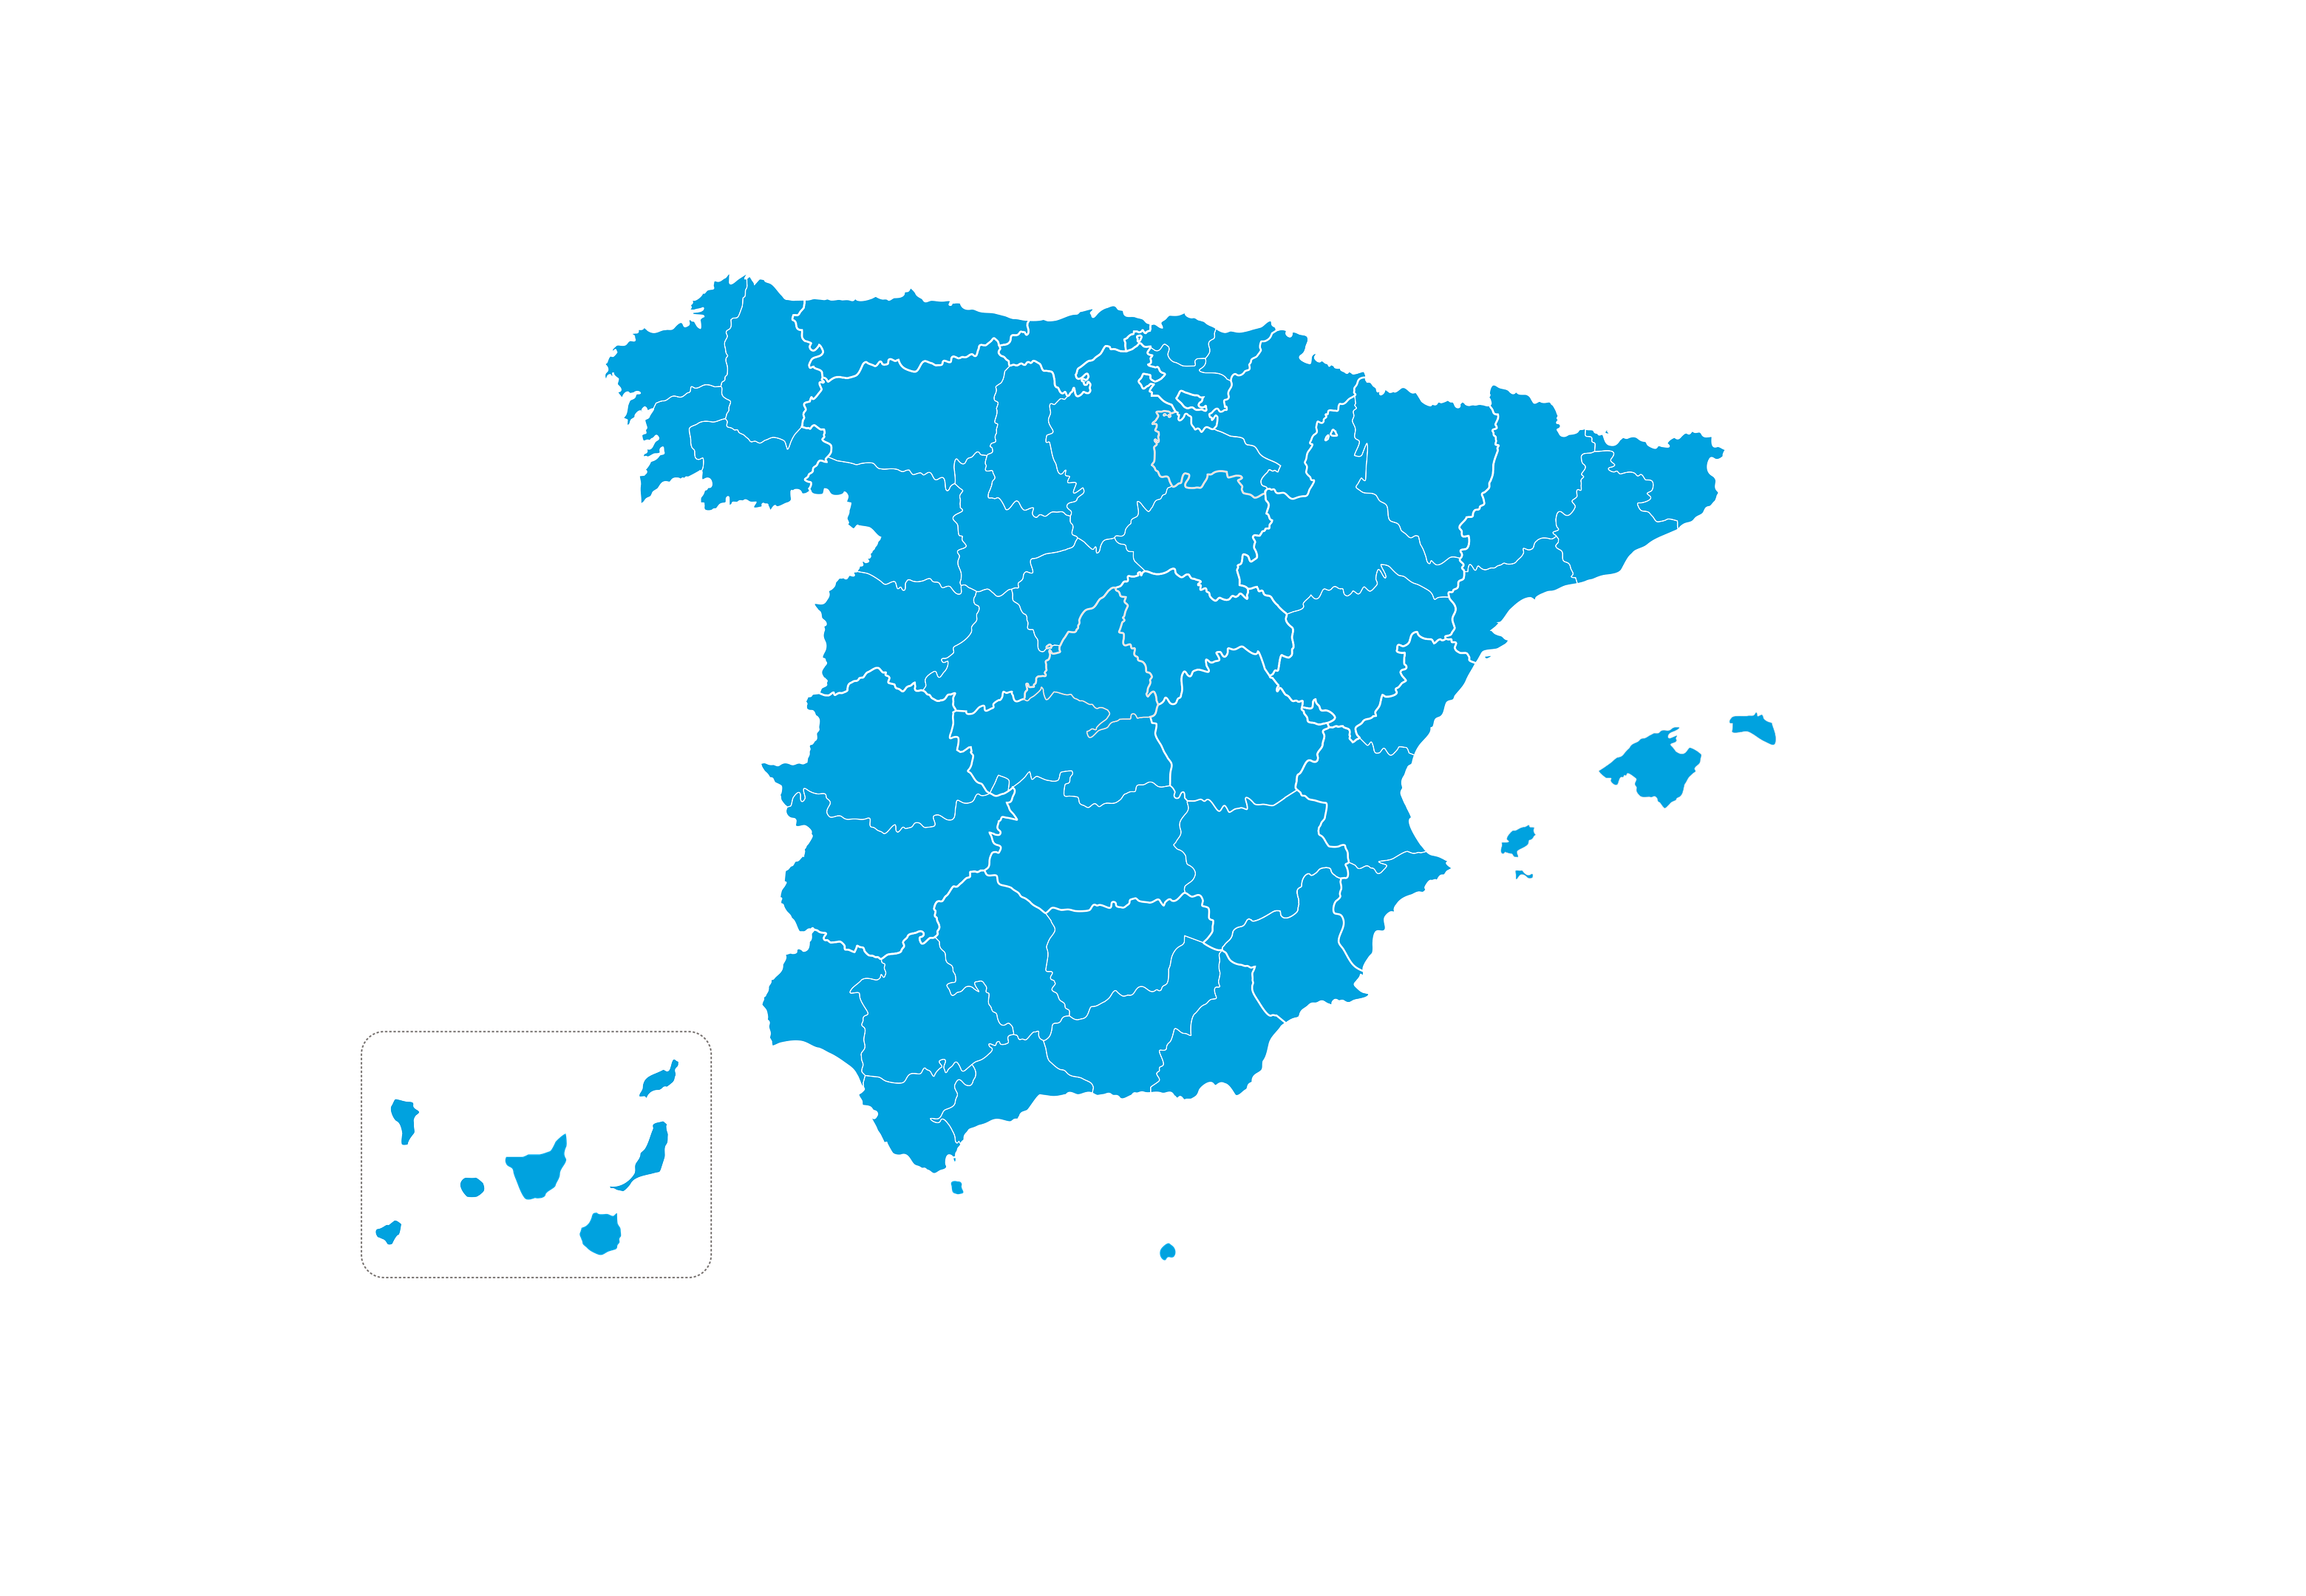 mapa espanya españa - pixabay maria alberto